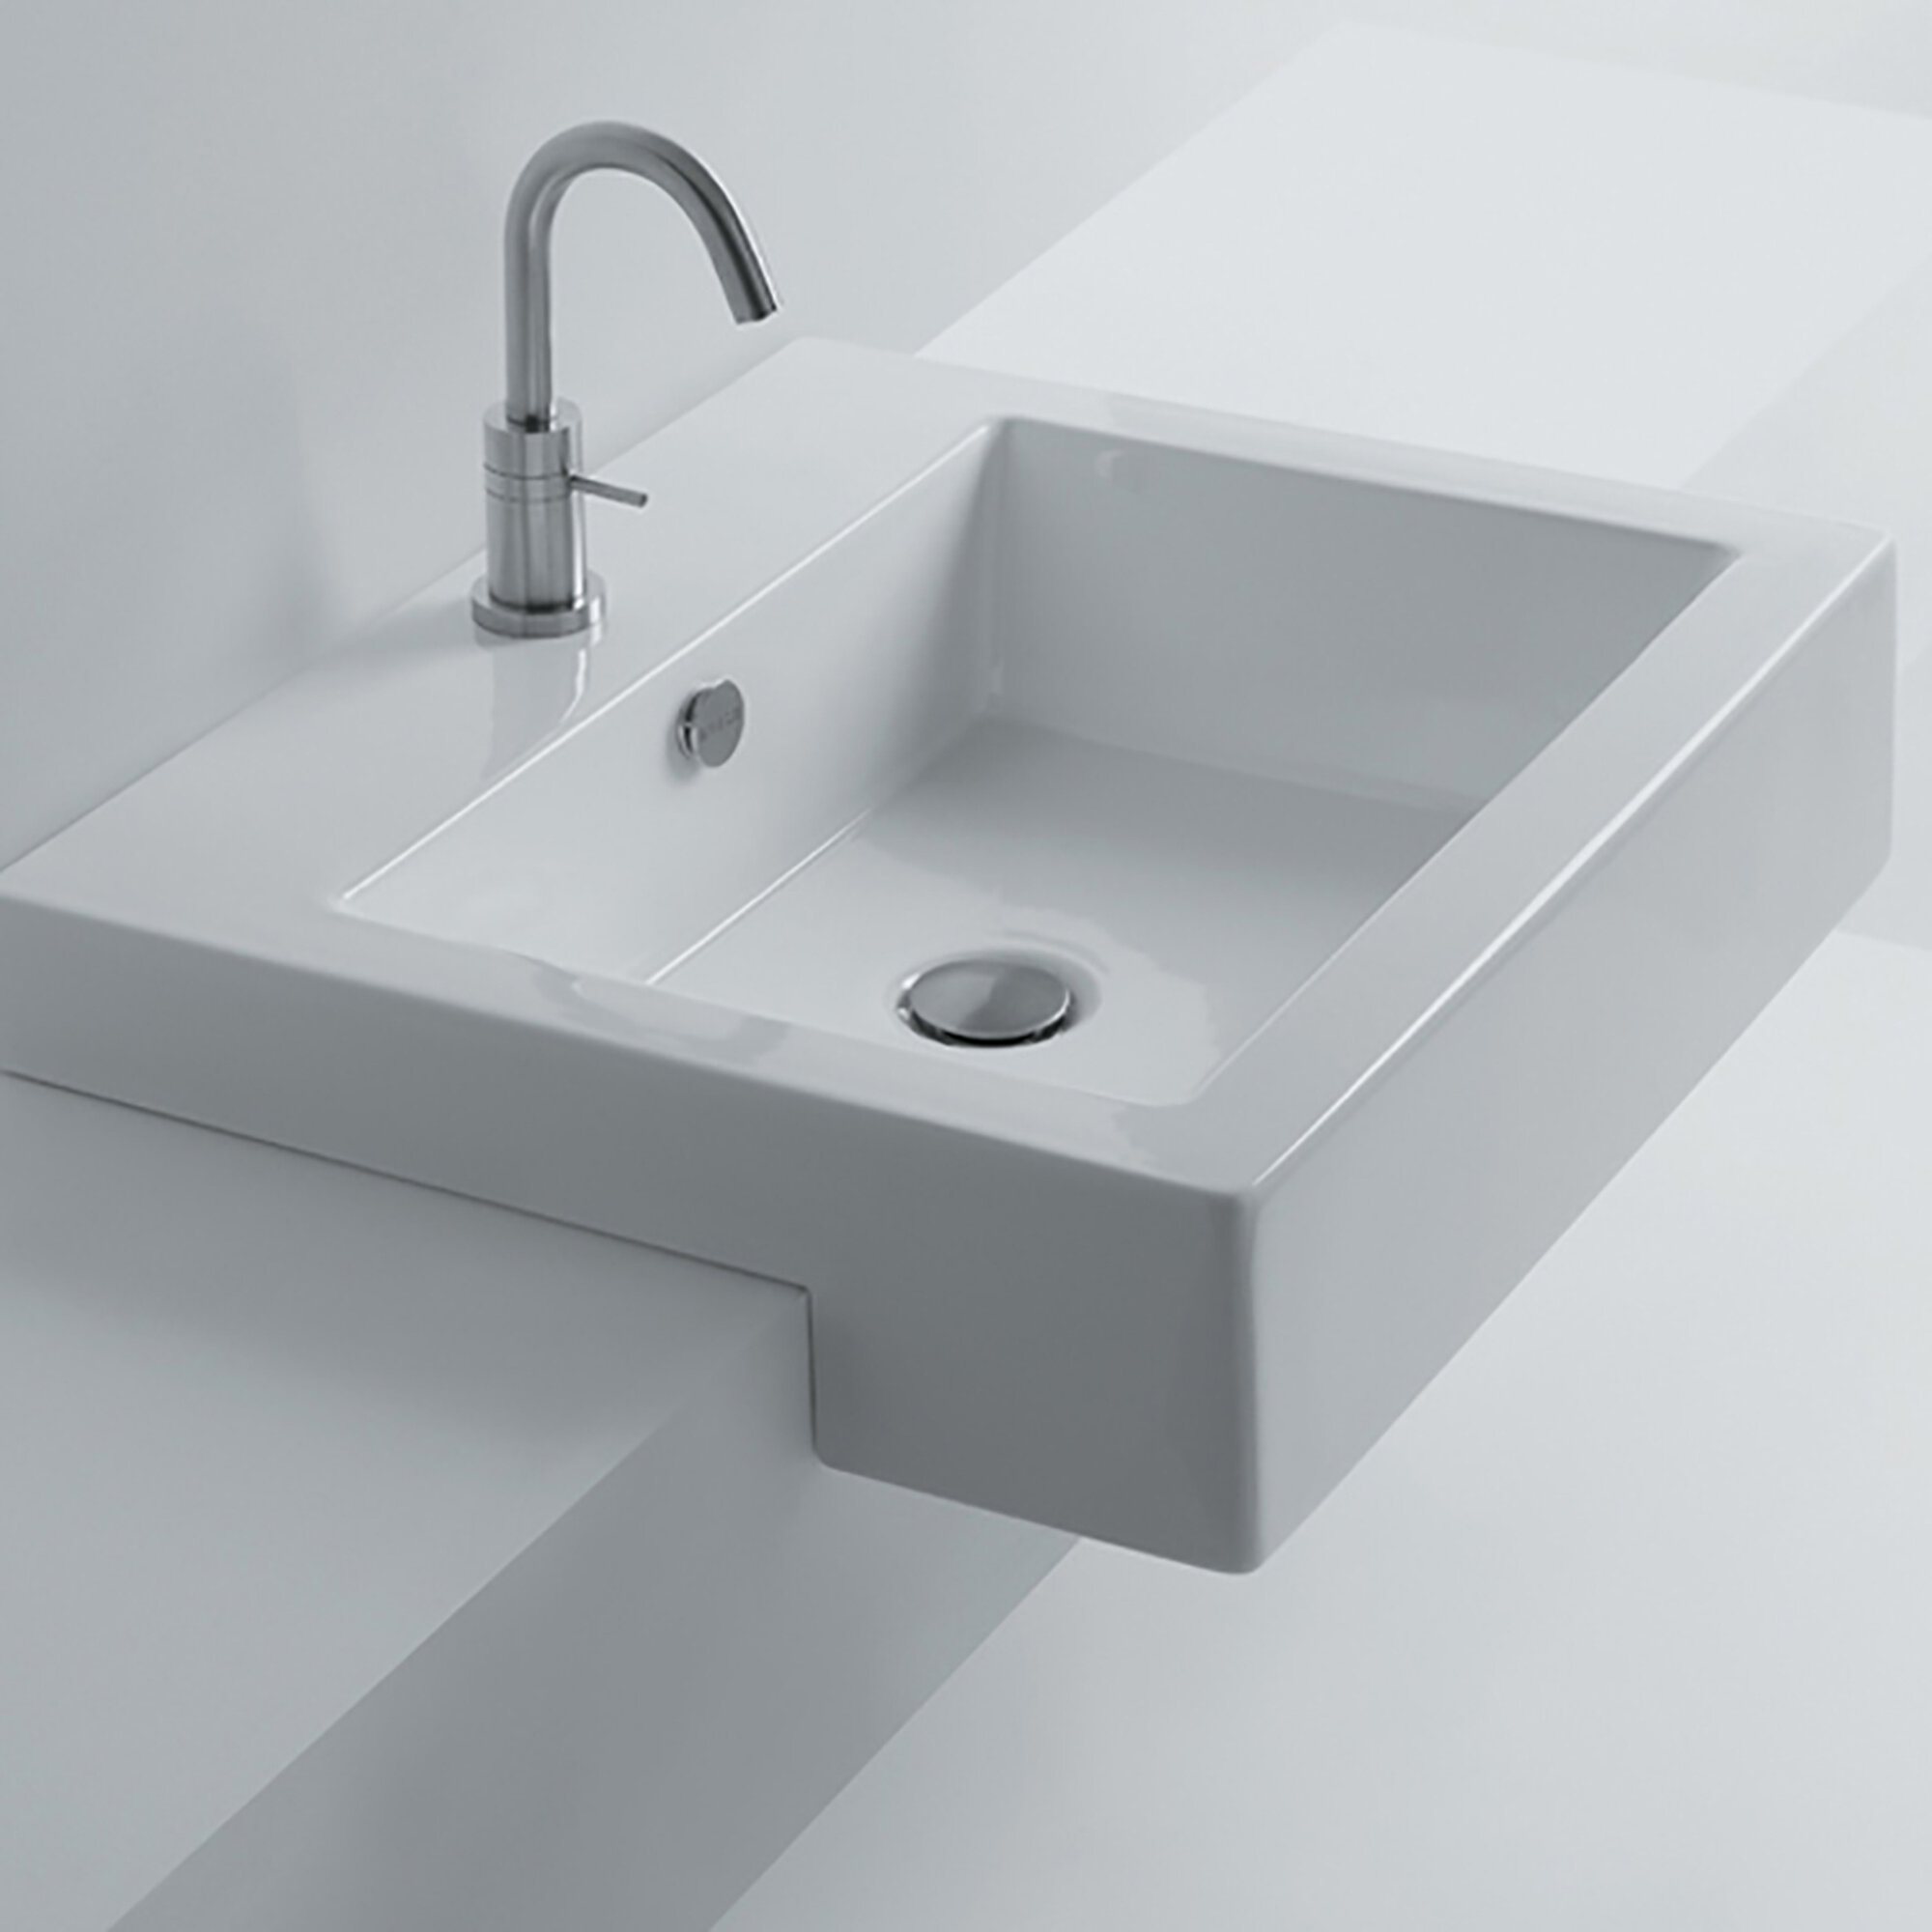 Whitestone Ceramic Square Drop-In Bathroom Sink with ...